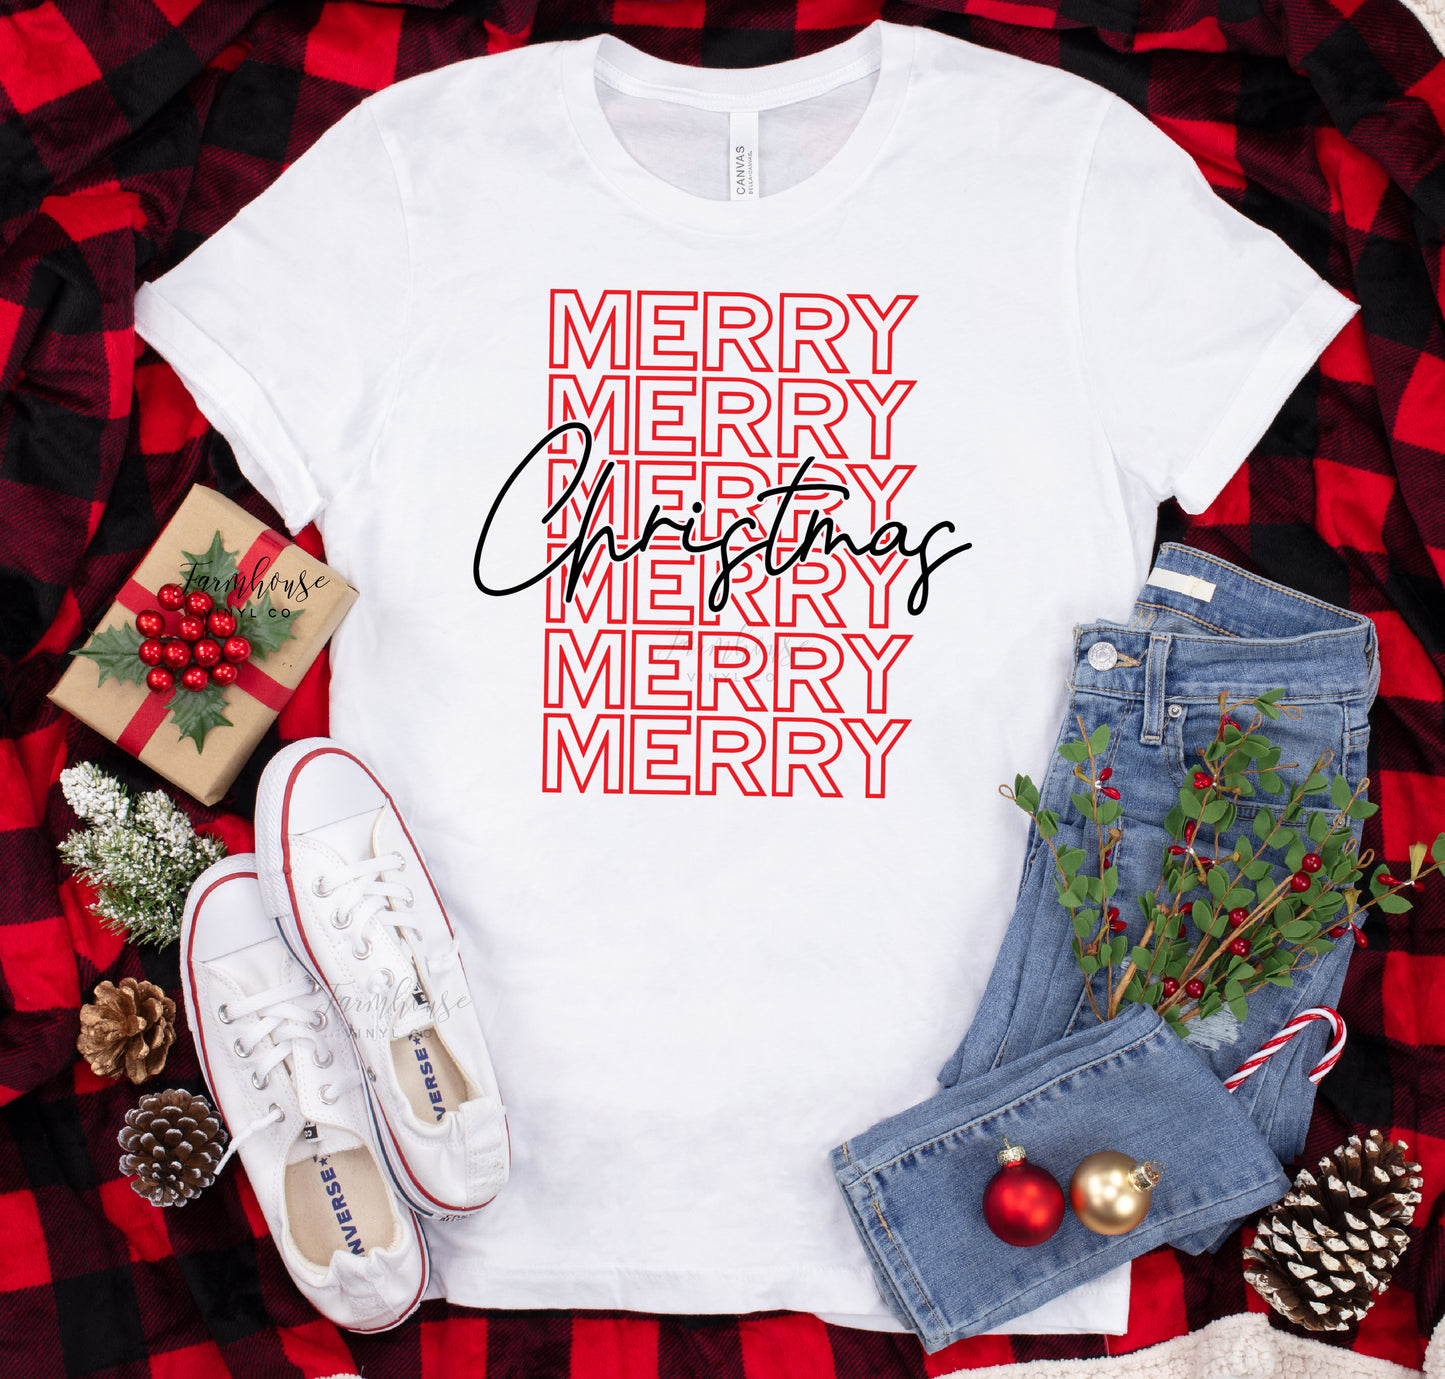 Mirror Christmas Shirt Collection